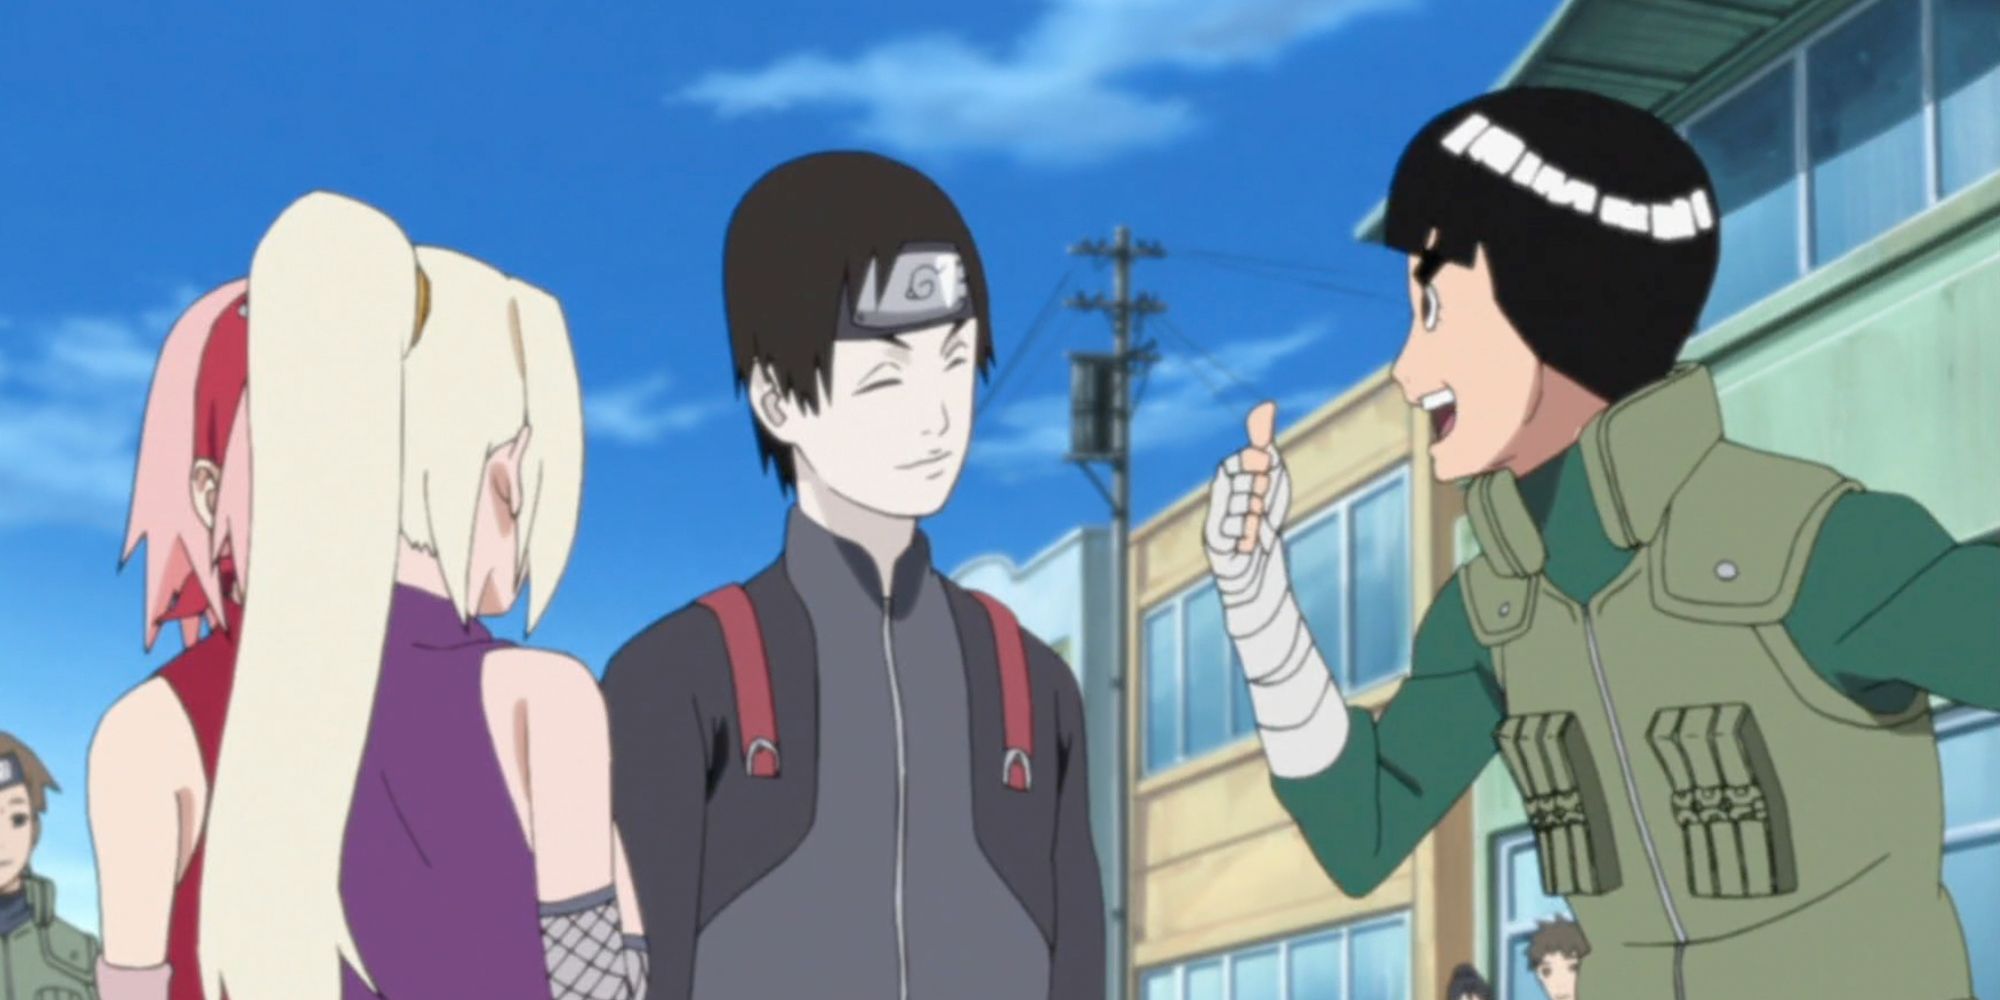 Sakura, Ino, and Sai talk with Lee in Naruto Shippuden